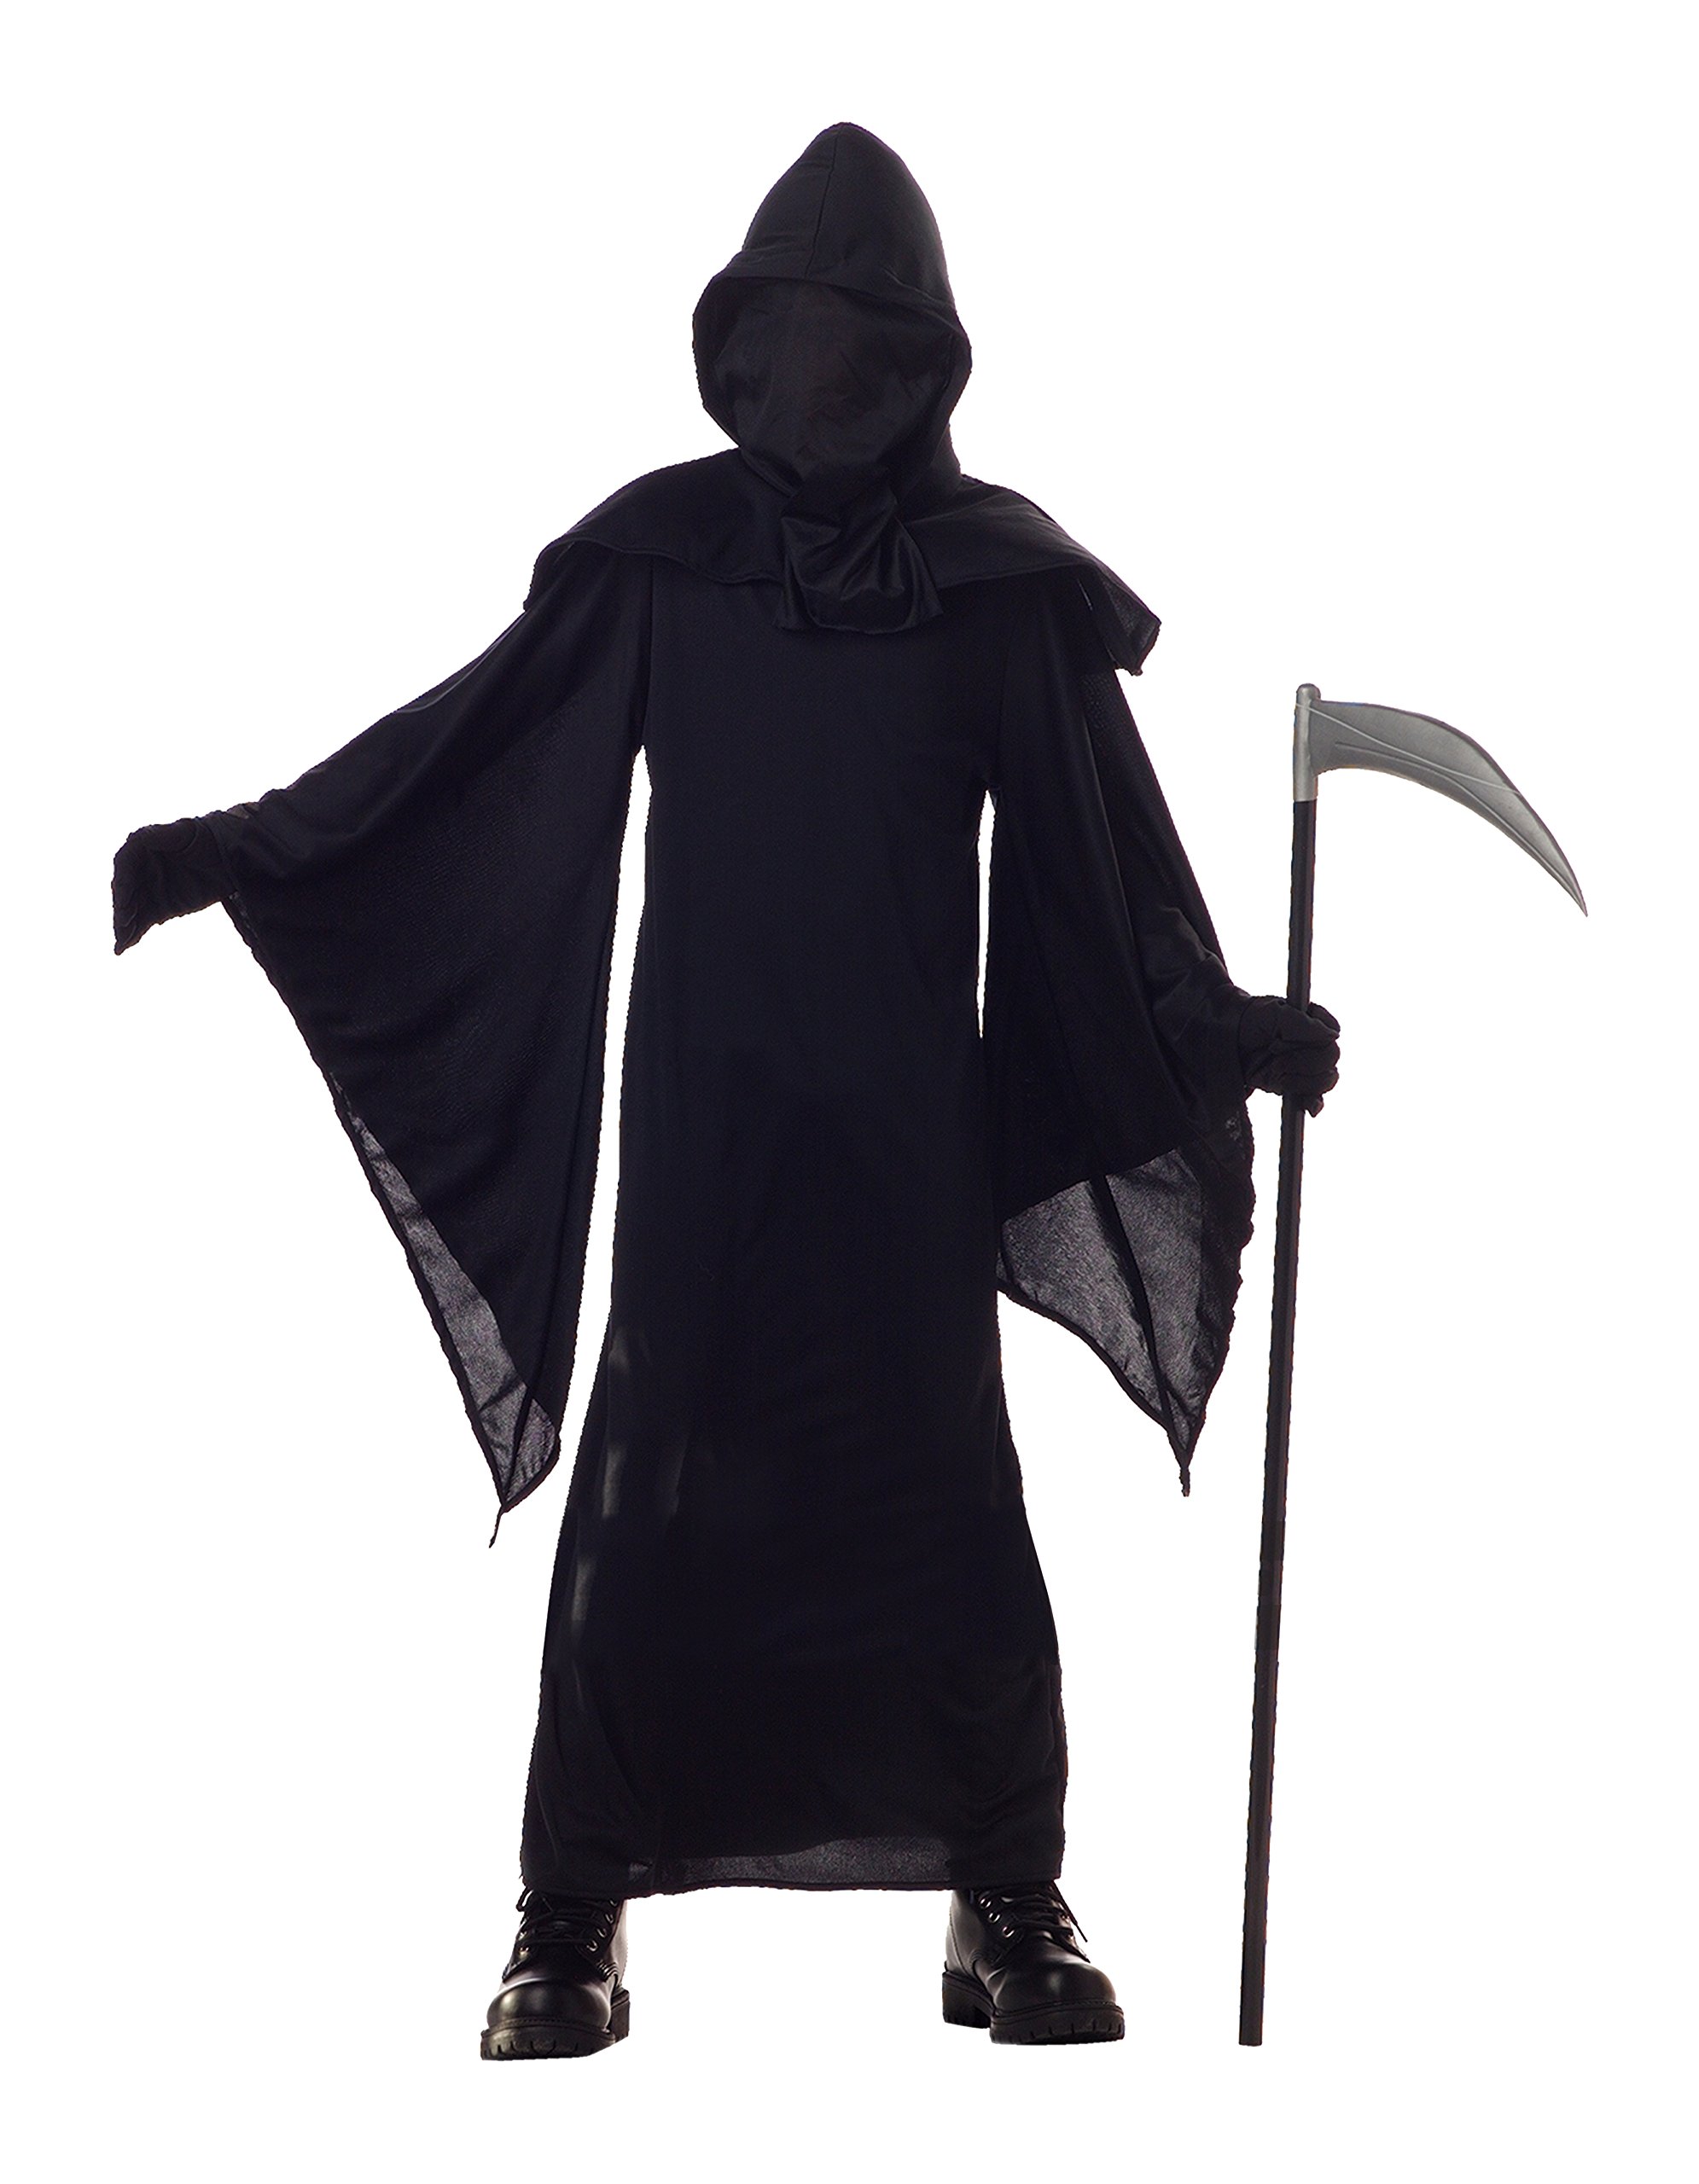 California Costumes Horror Robe Child Costume, X-Large , Black